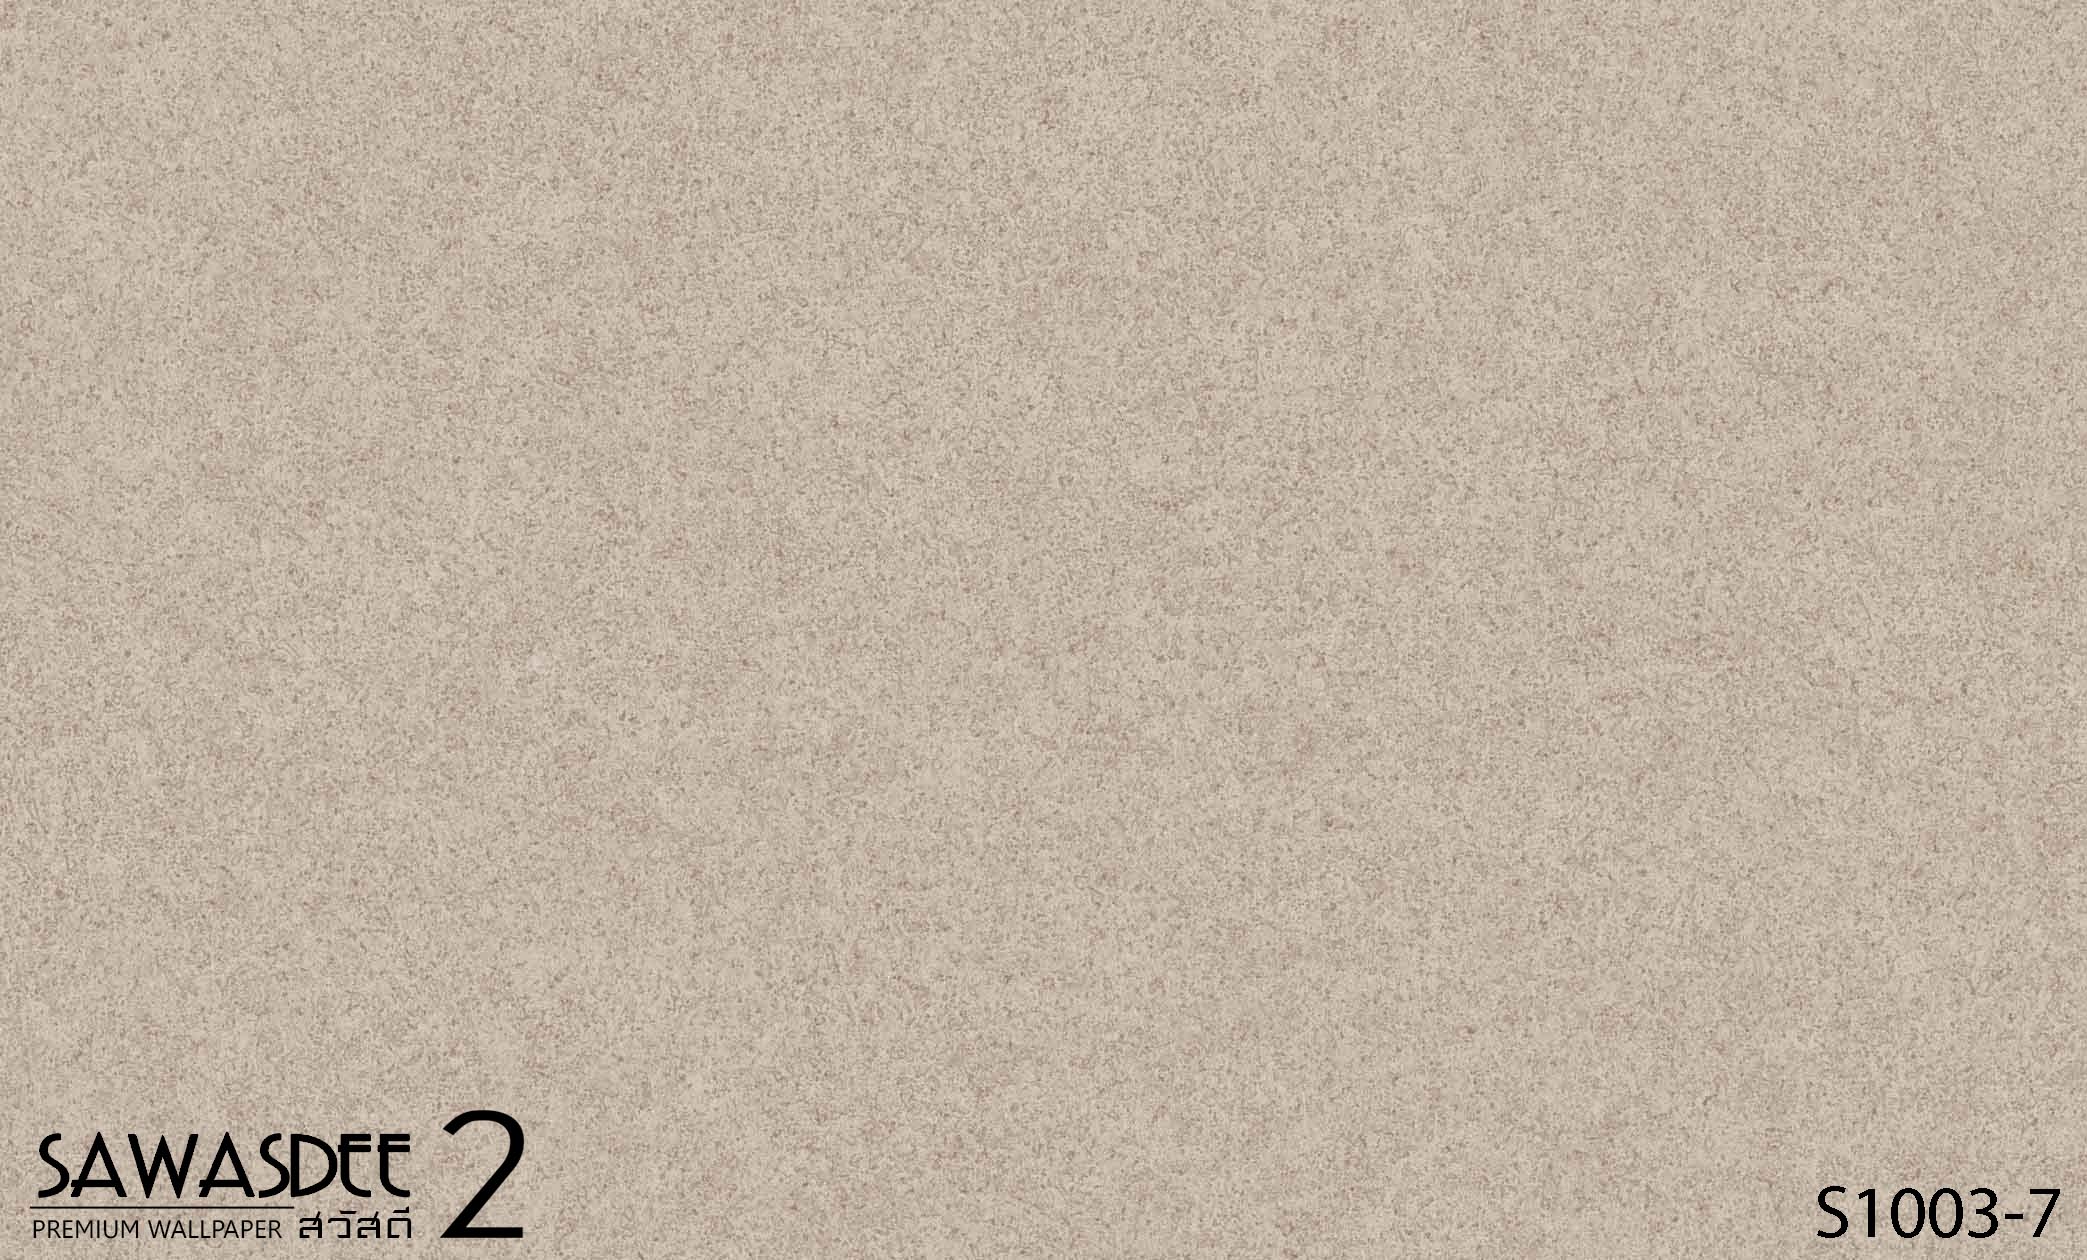 Wallpaper (SAWASDEE 2) S1003-7